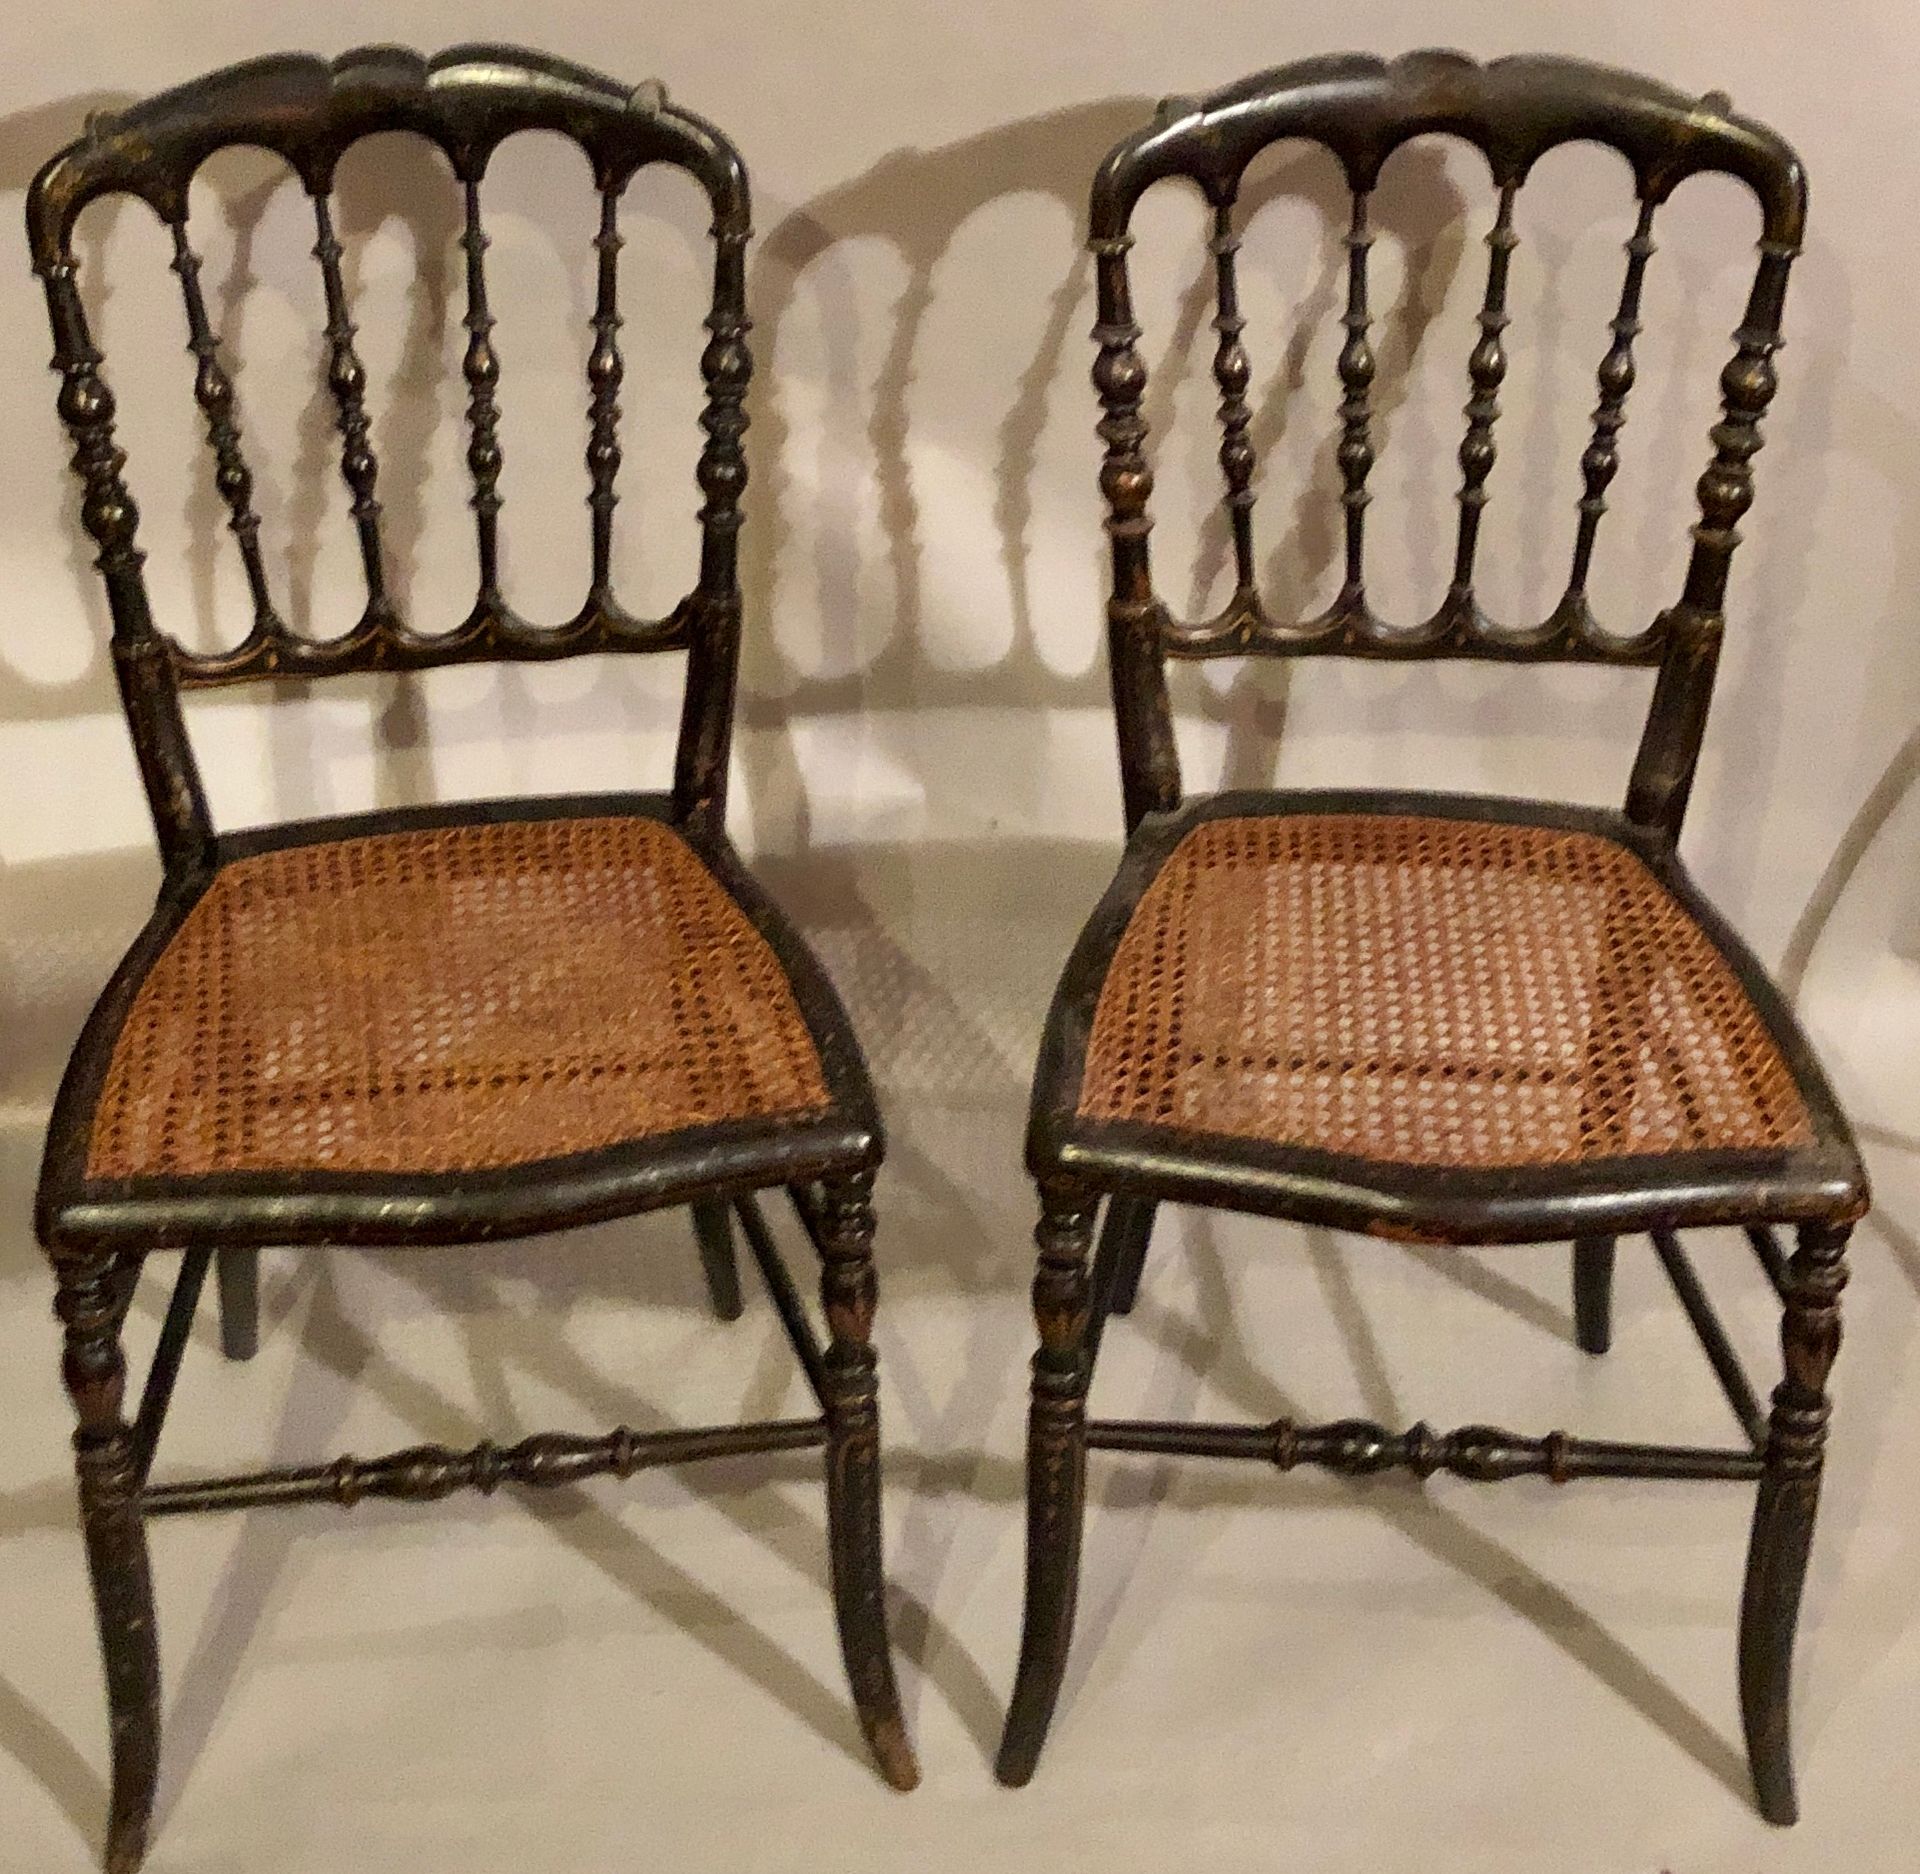 Null 一对黑漆拱形椅腿的木制椅子。 



背部有四根主轴和藤条座椅。

约1880年。



H.85厘米 宽40厘米